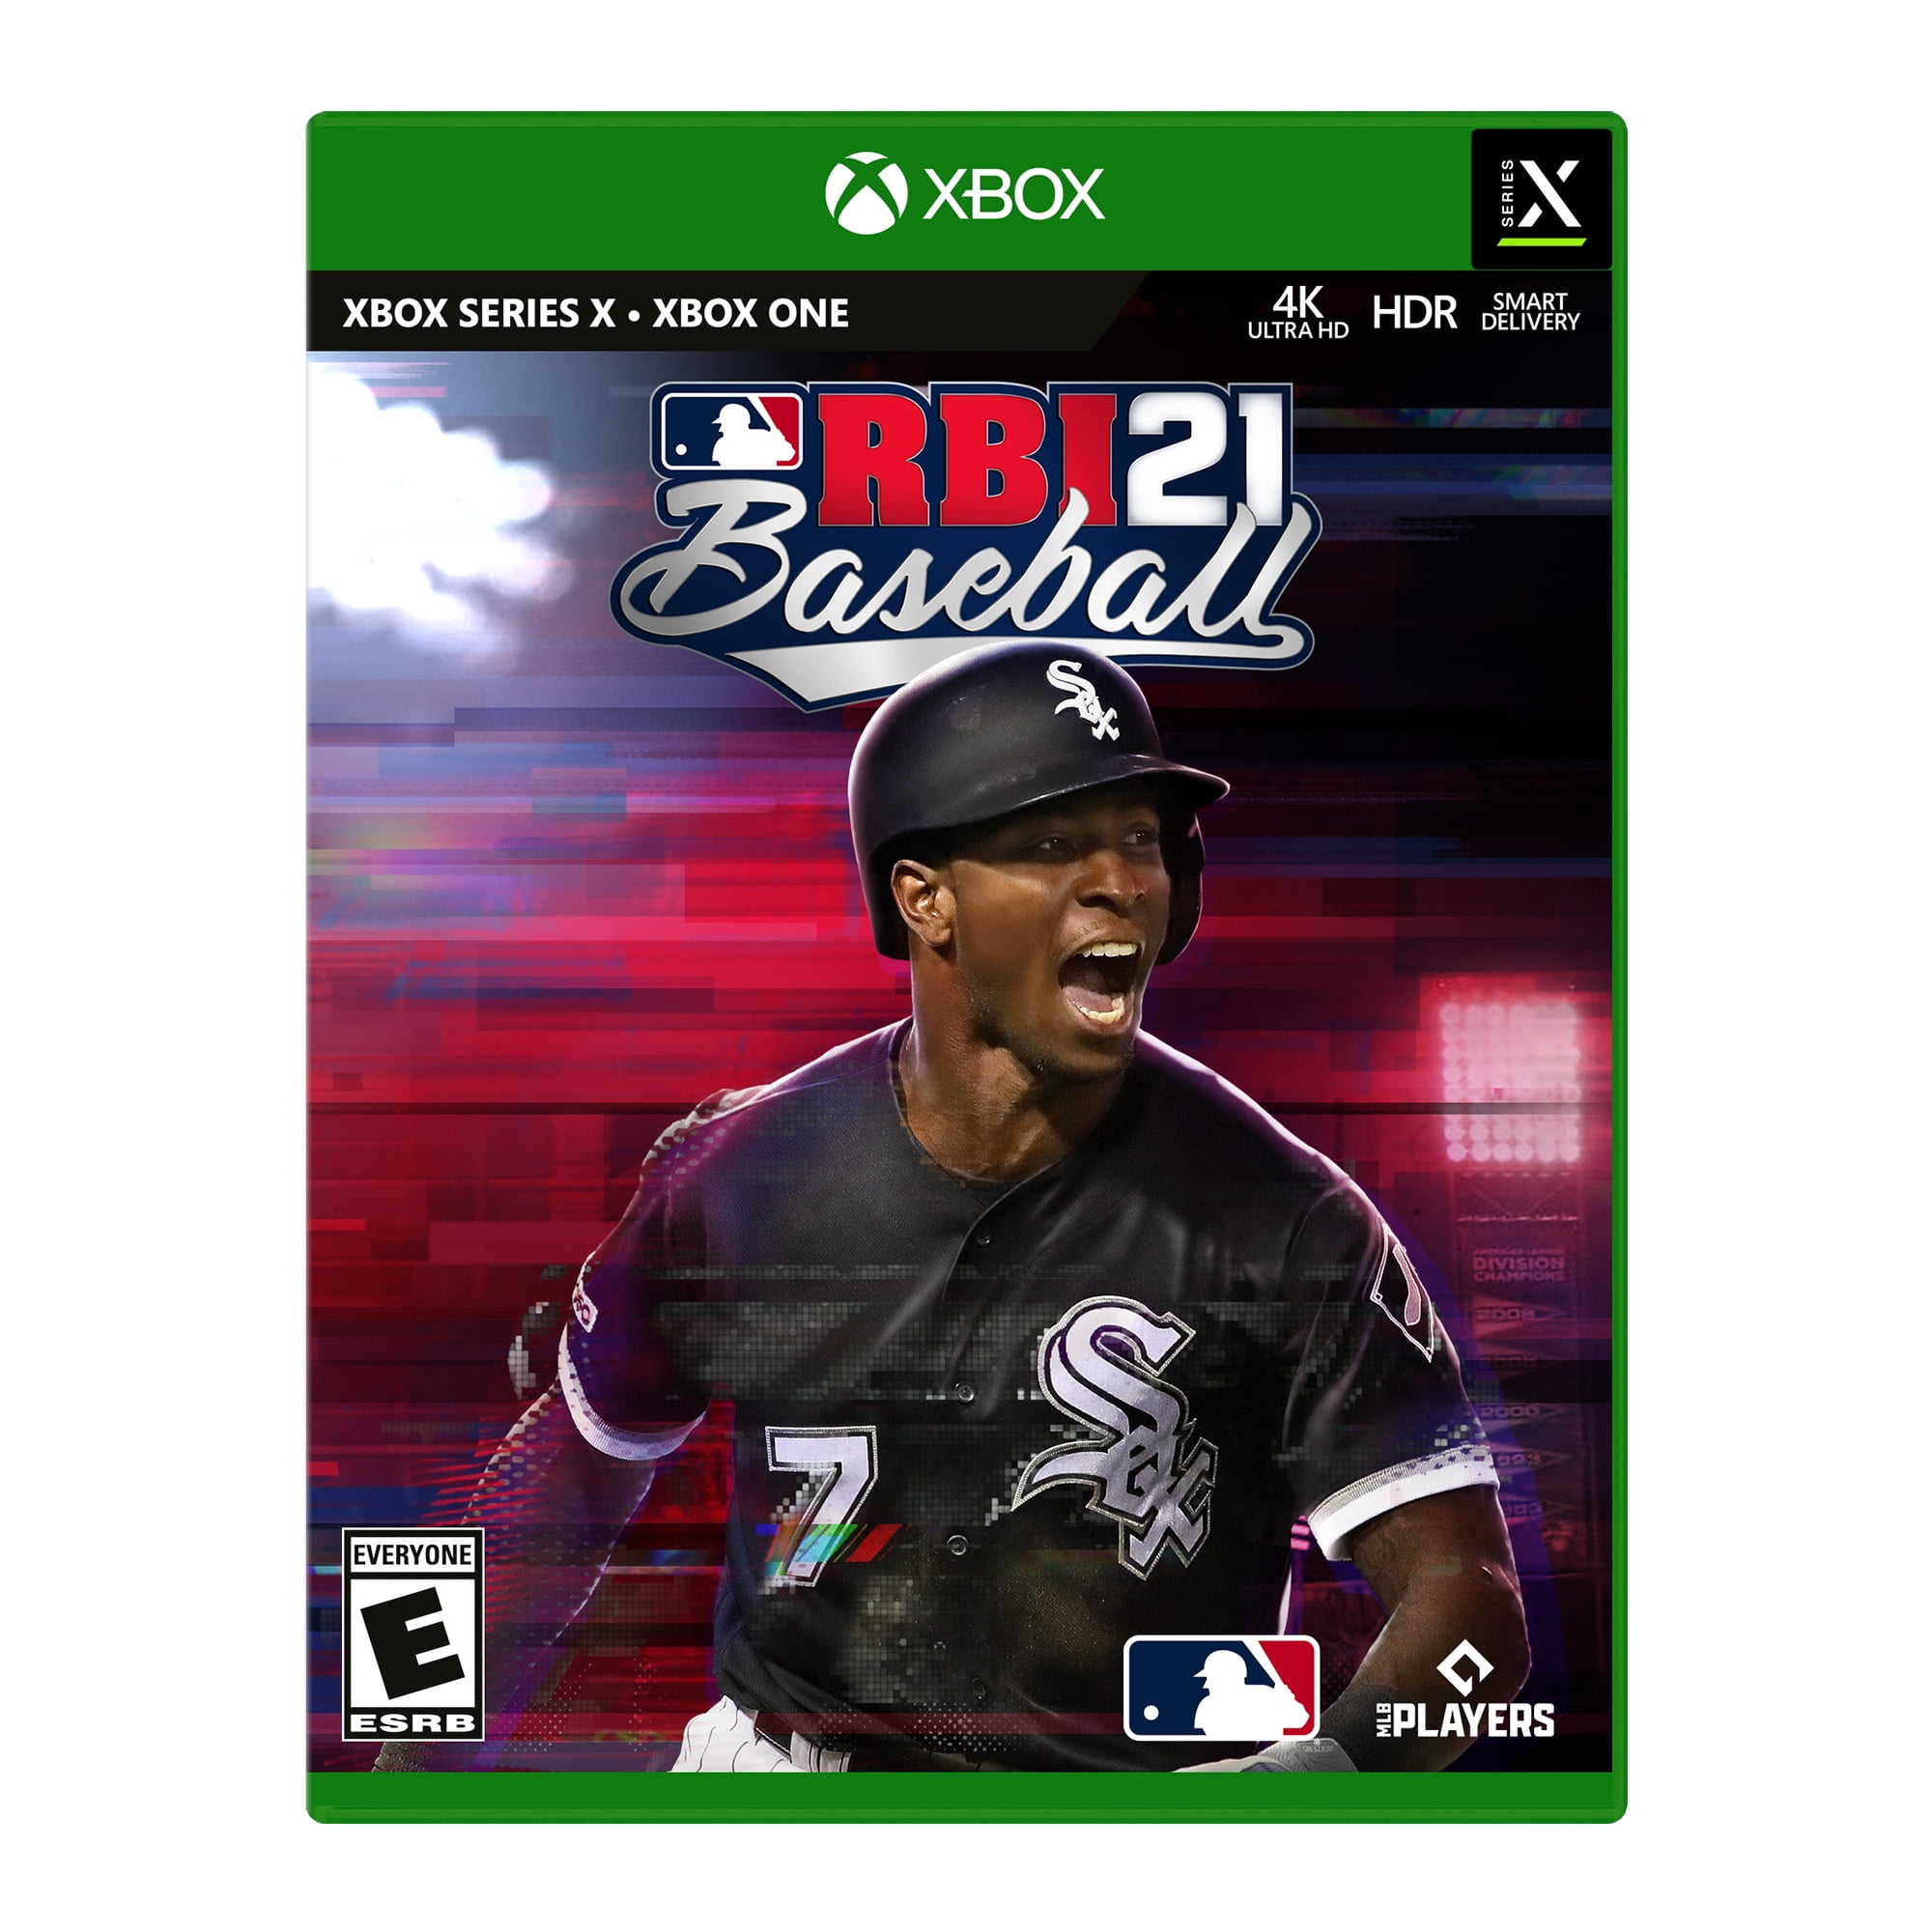 MLB RBI Baseball 21 with Bonus Topps Foil Card, Major League